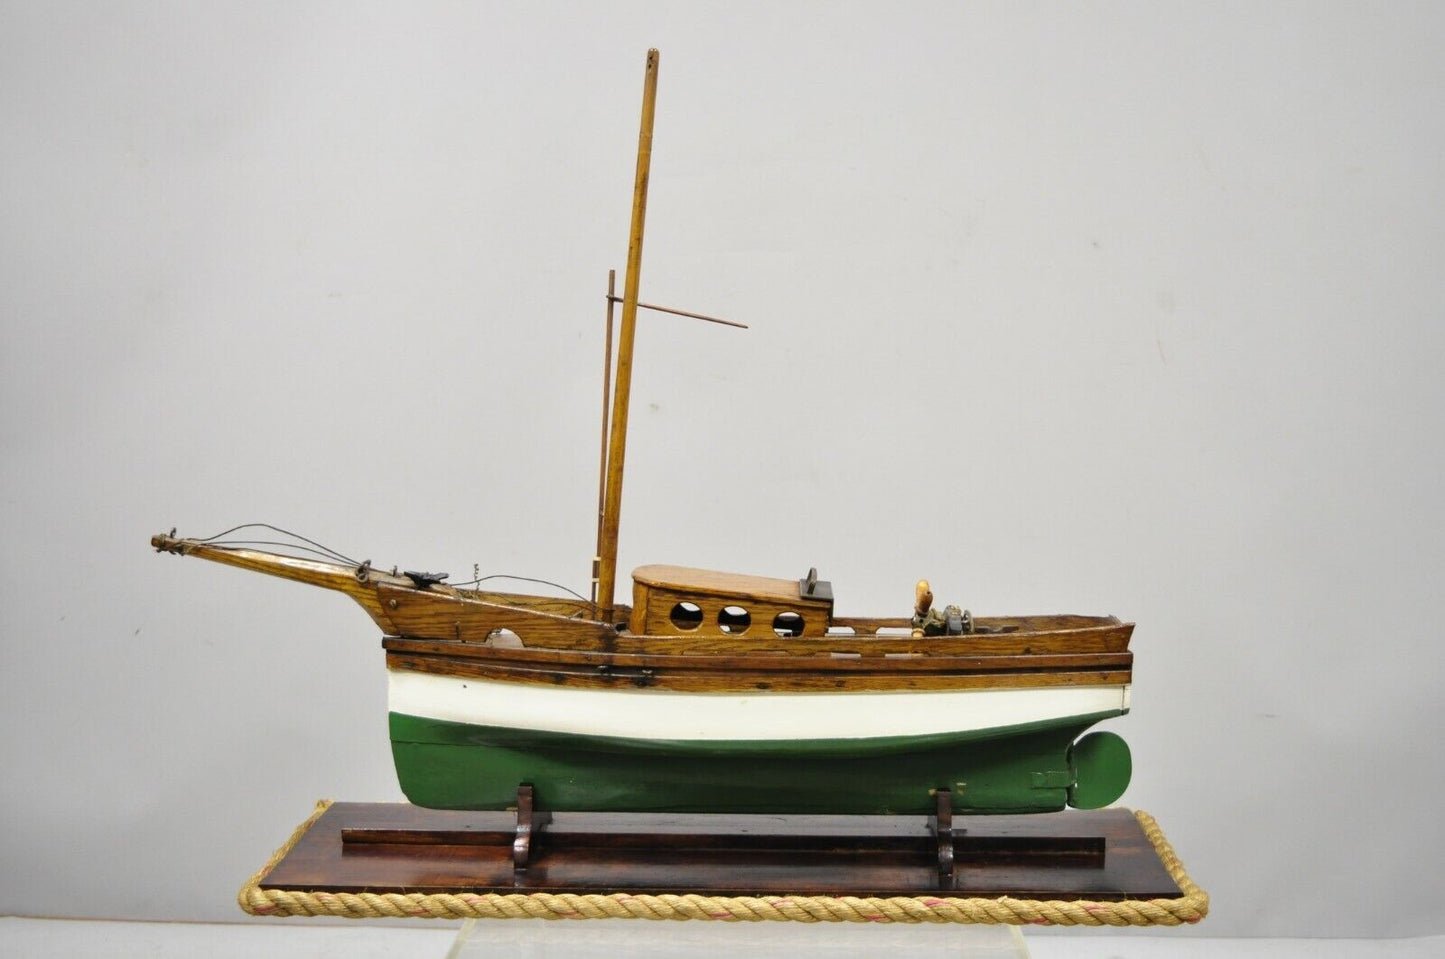 Antique Large Oak Wood Model Sailboat Ship Boat on Base Stand